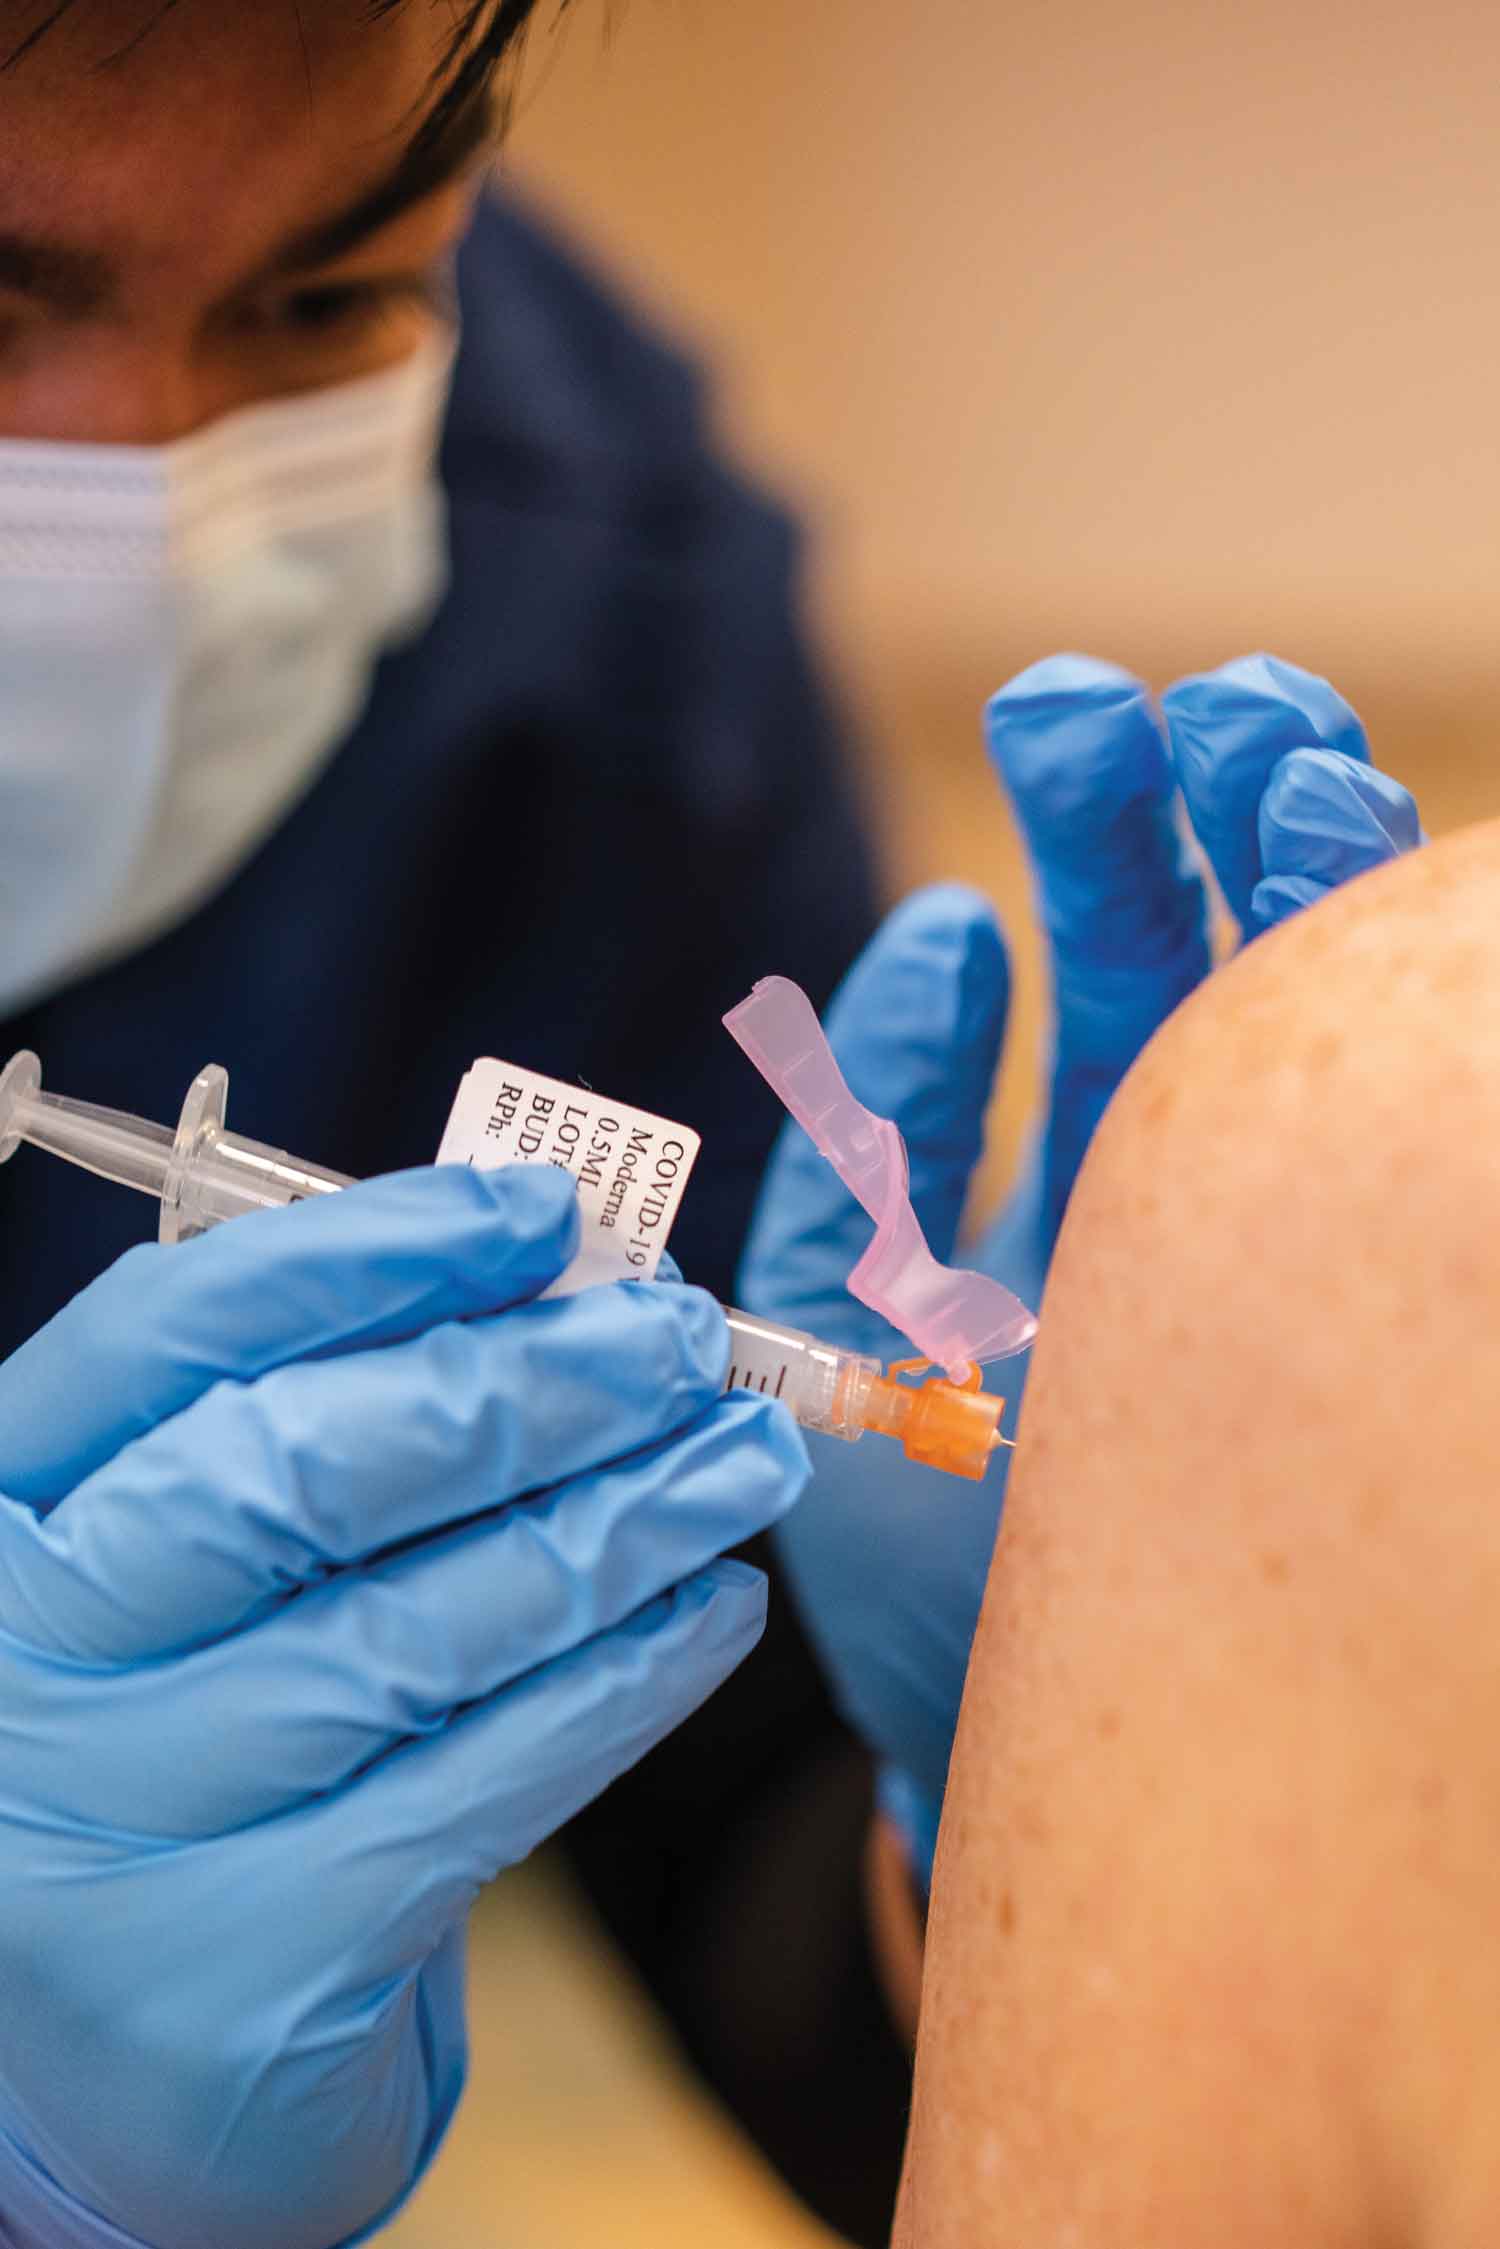  Nursing student Joshua Gonzalez administers a vaccine